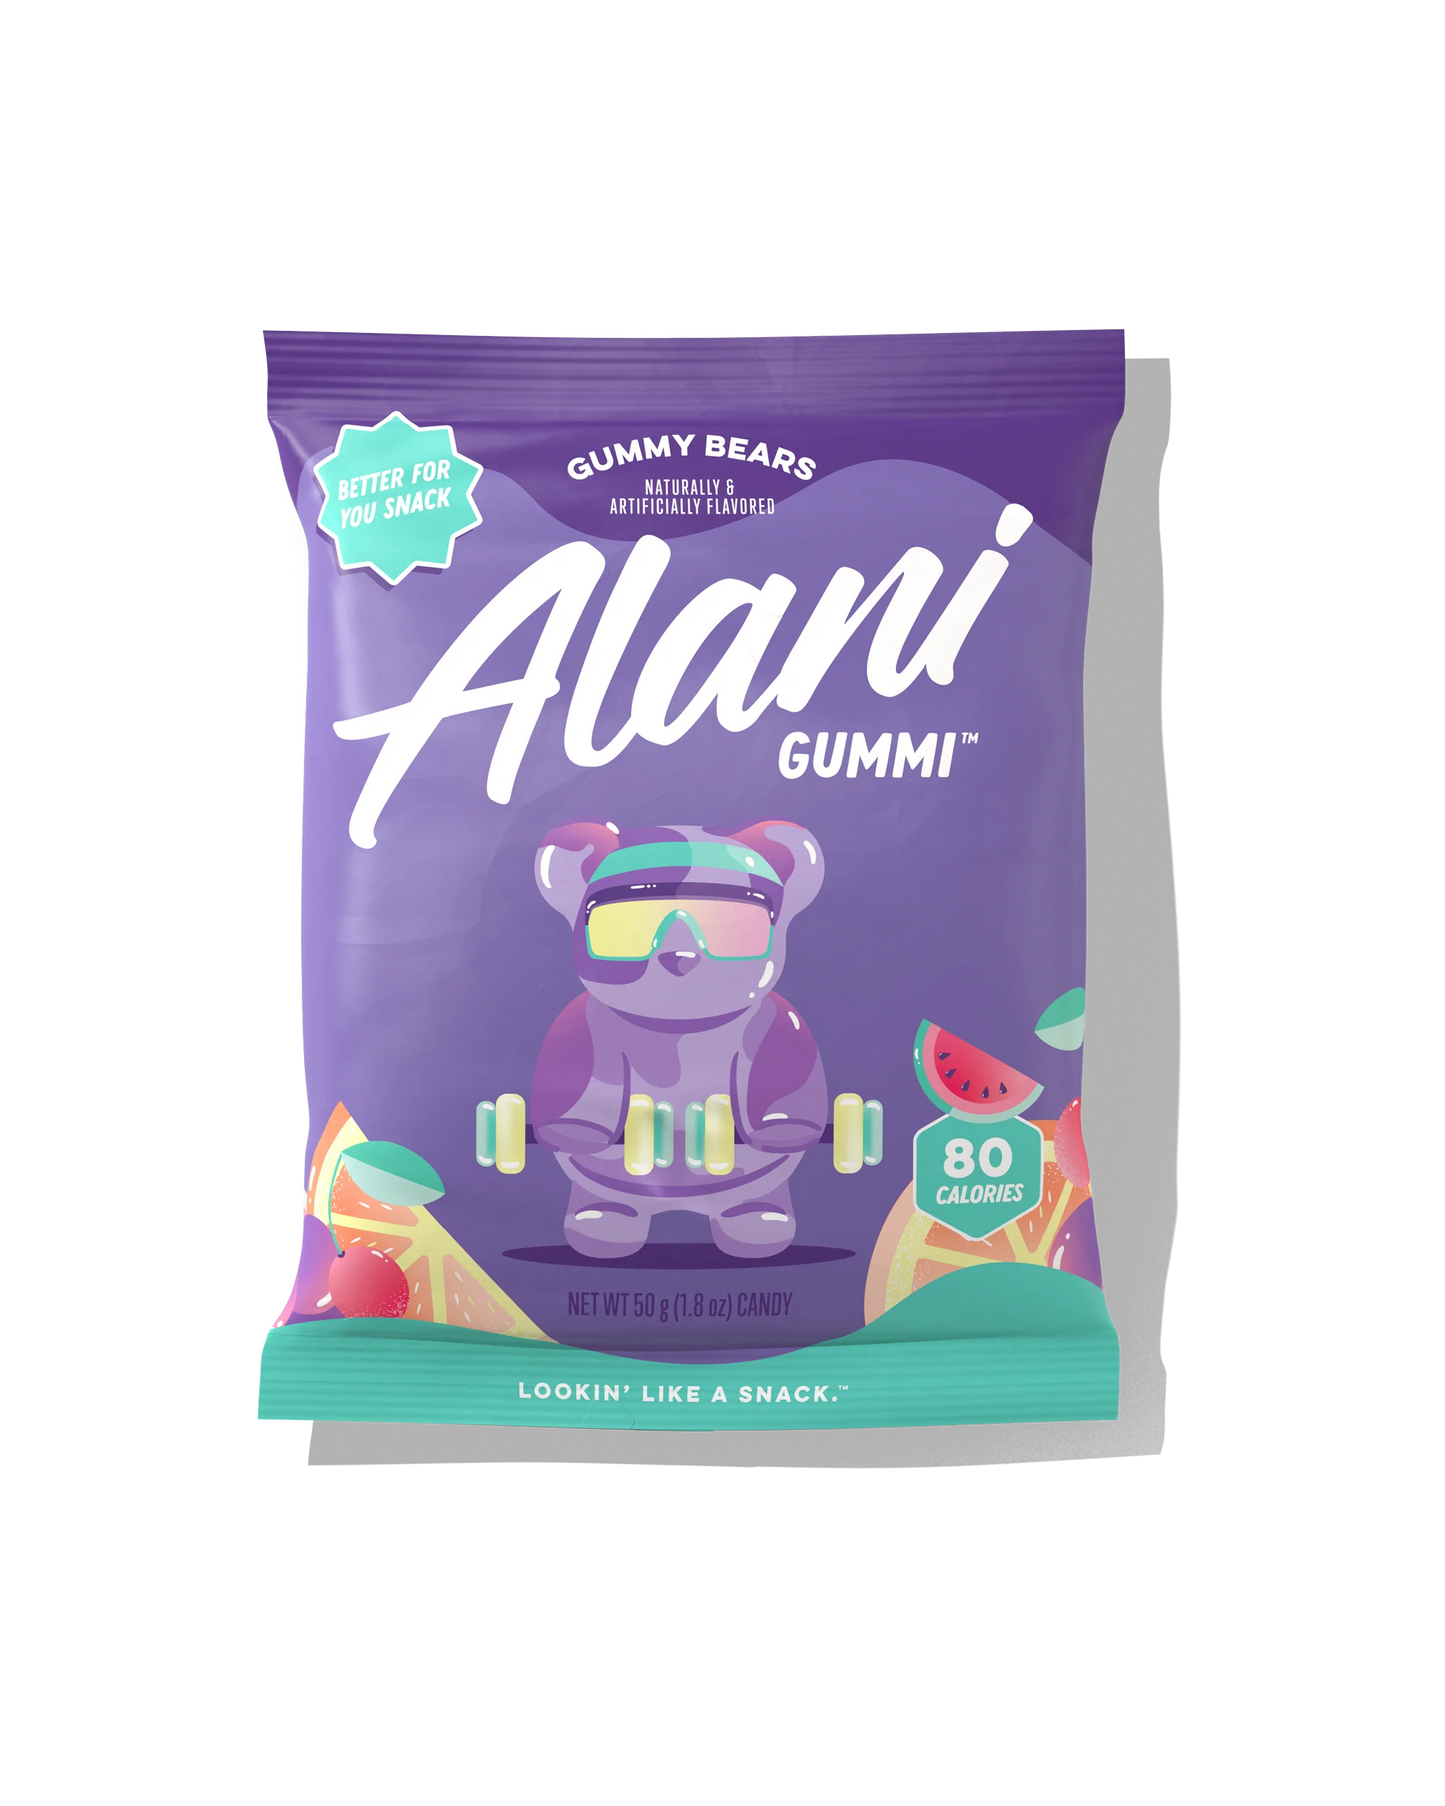 Alani Gummi | Gummy Bears